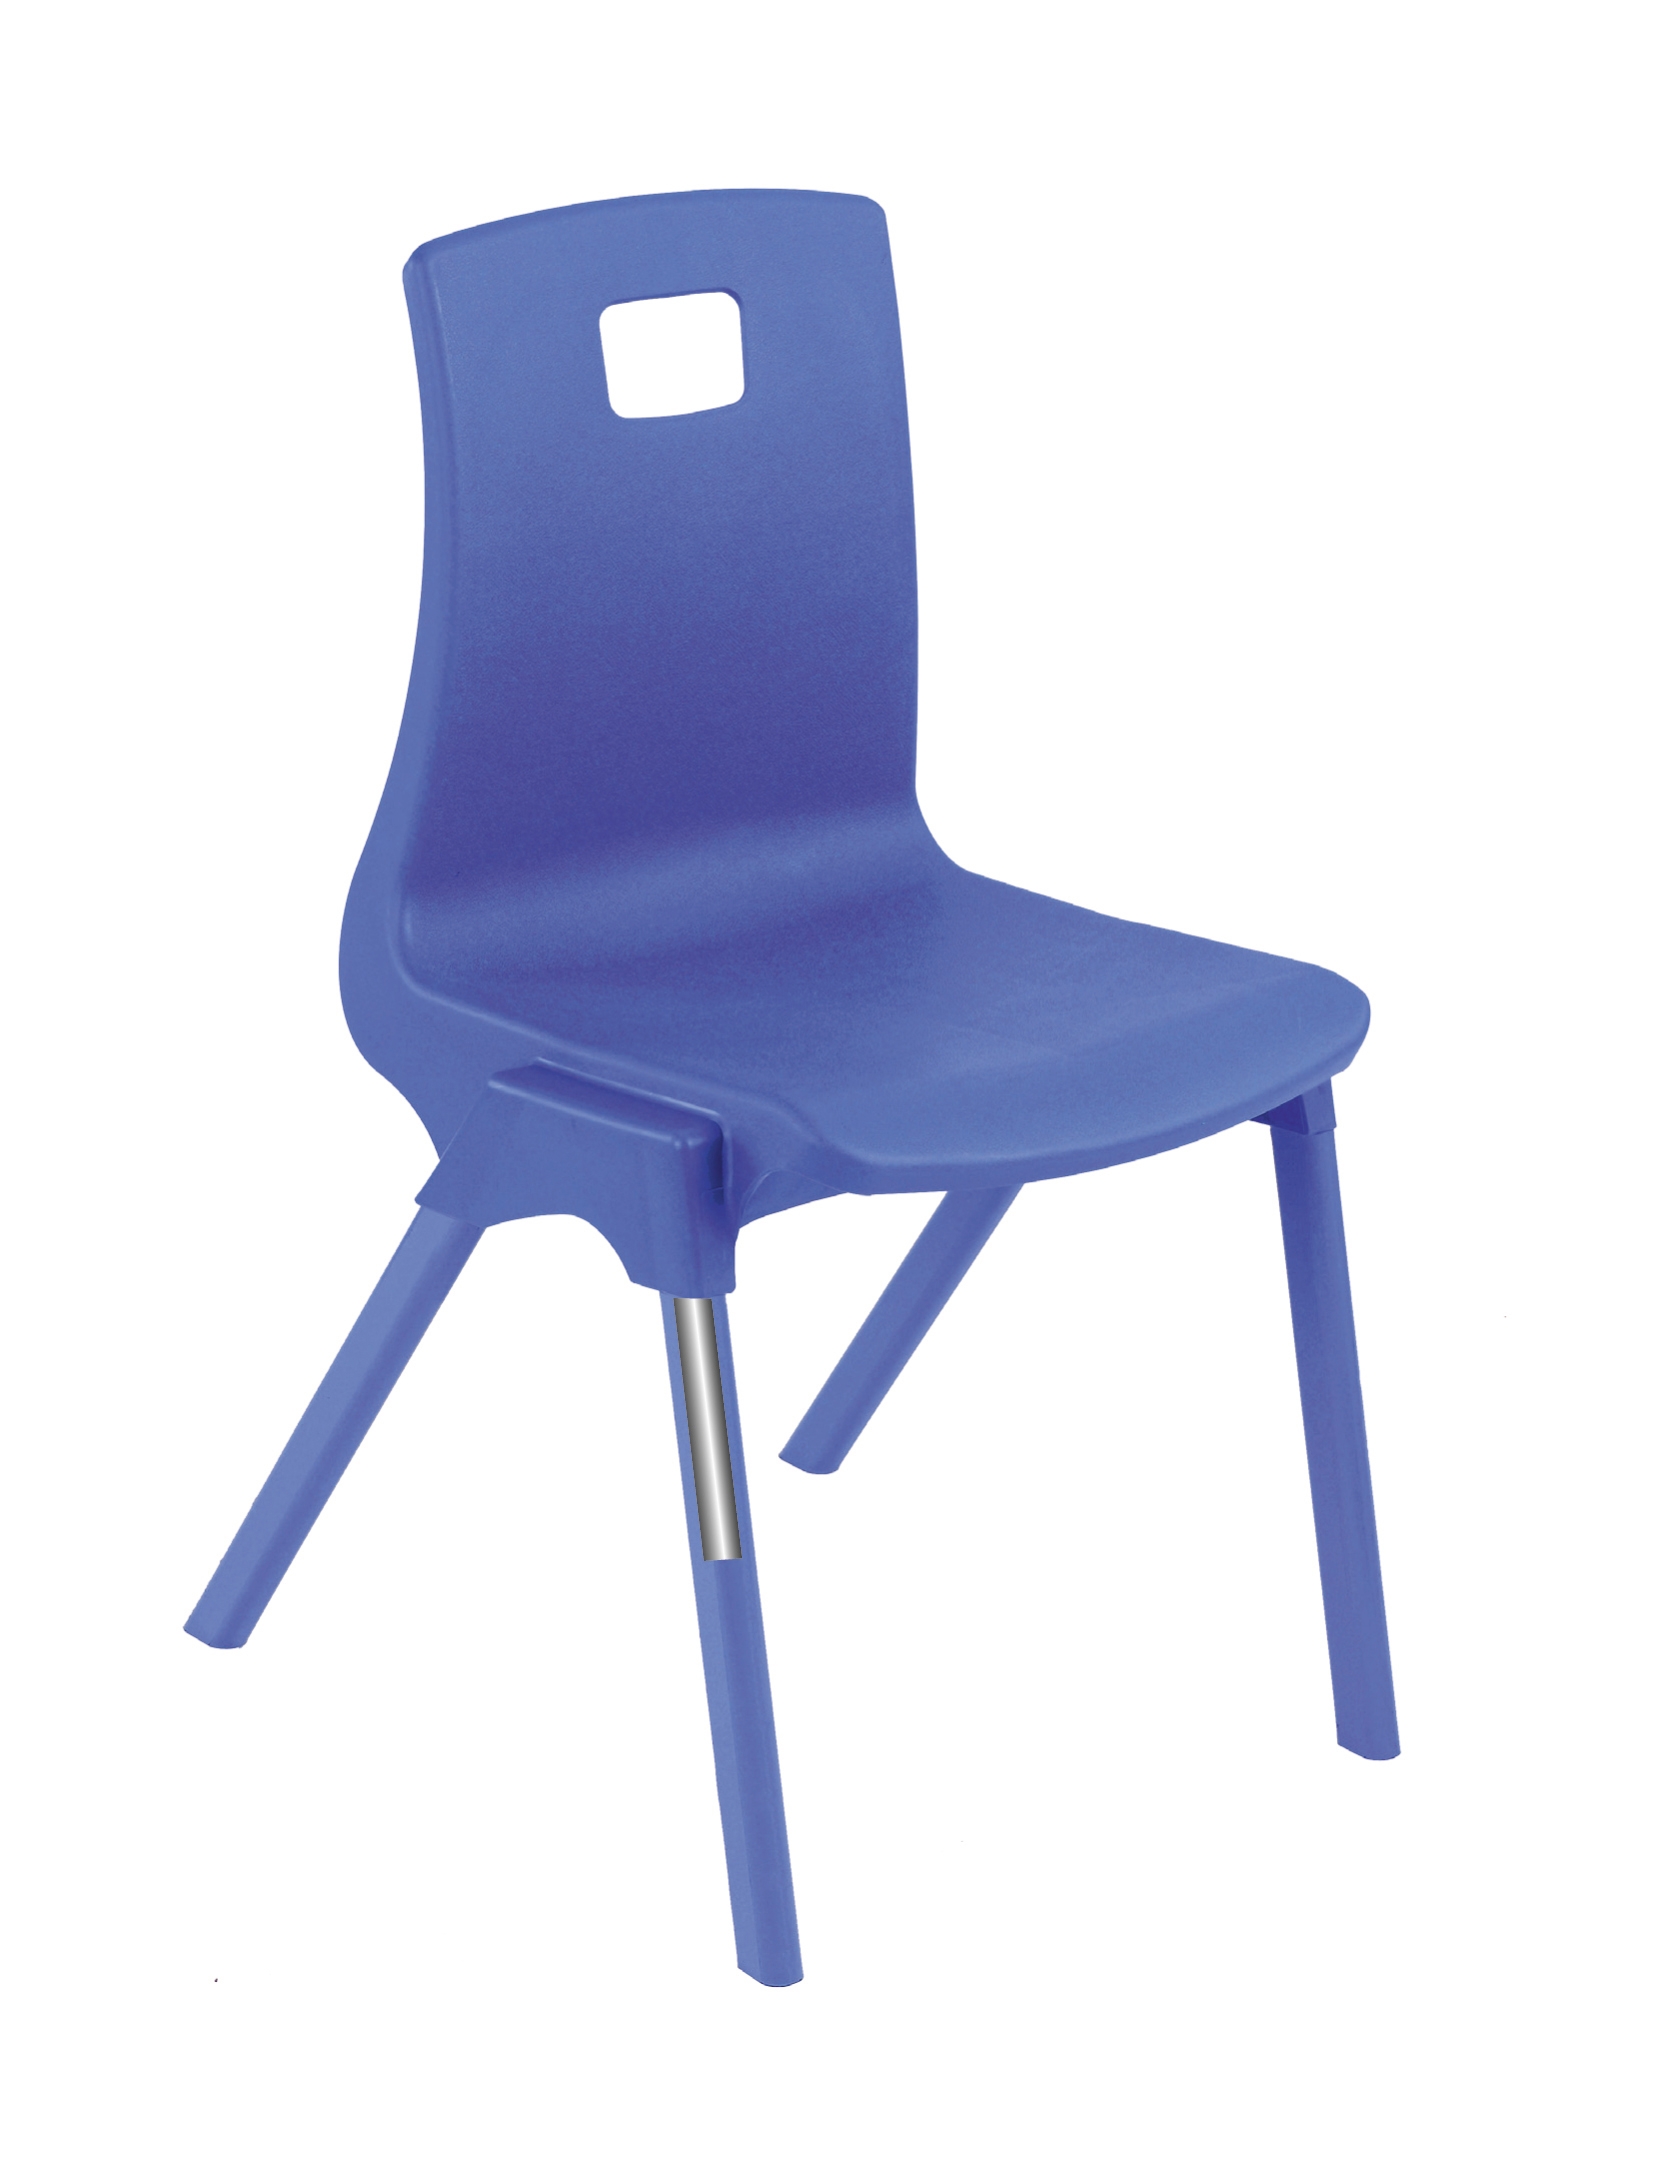 Free school chair.